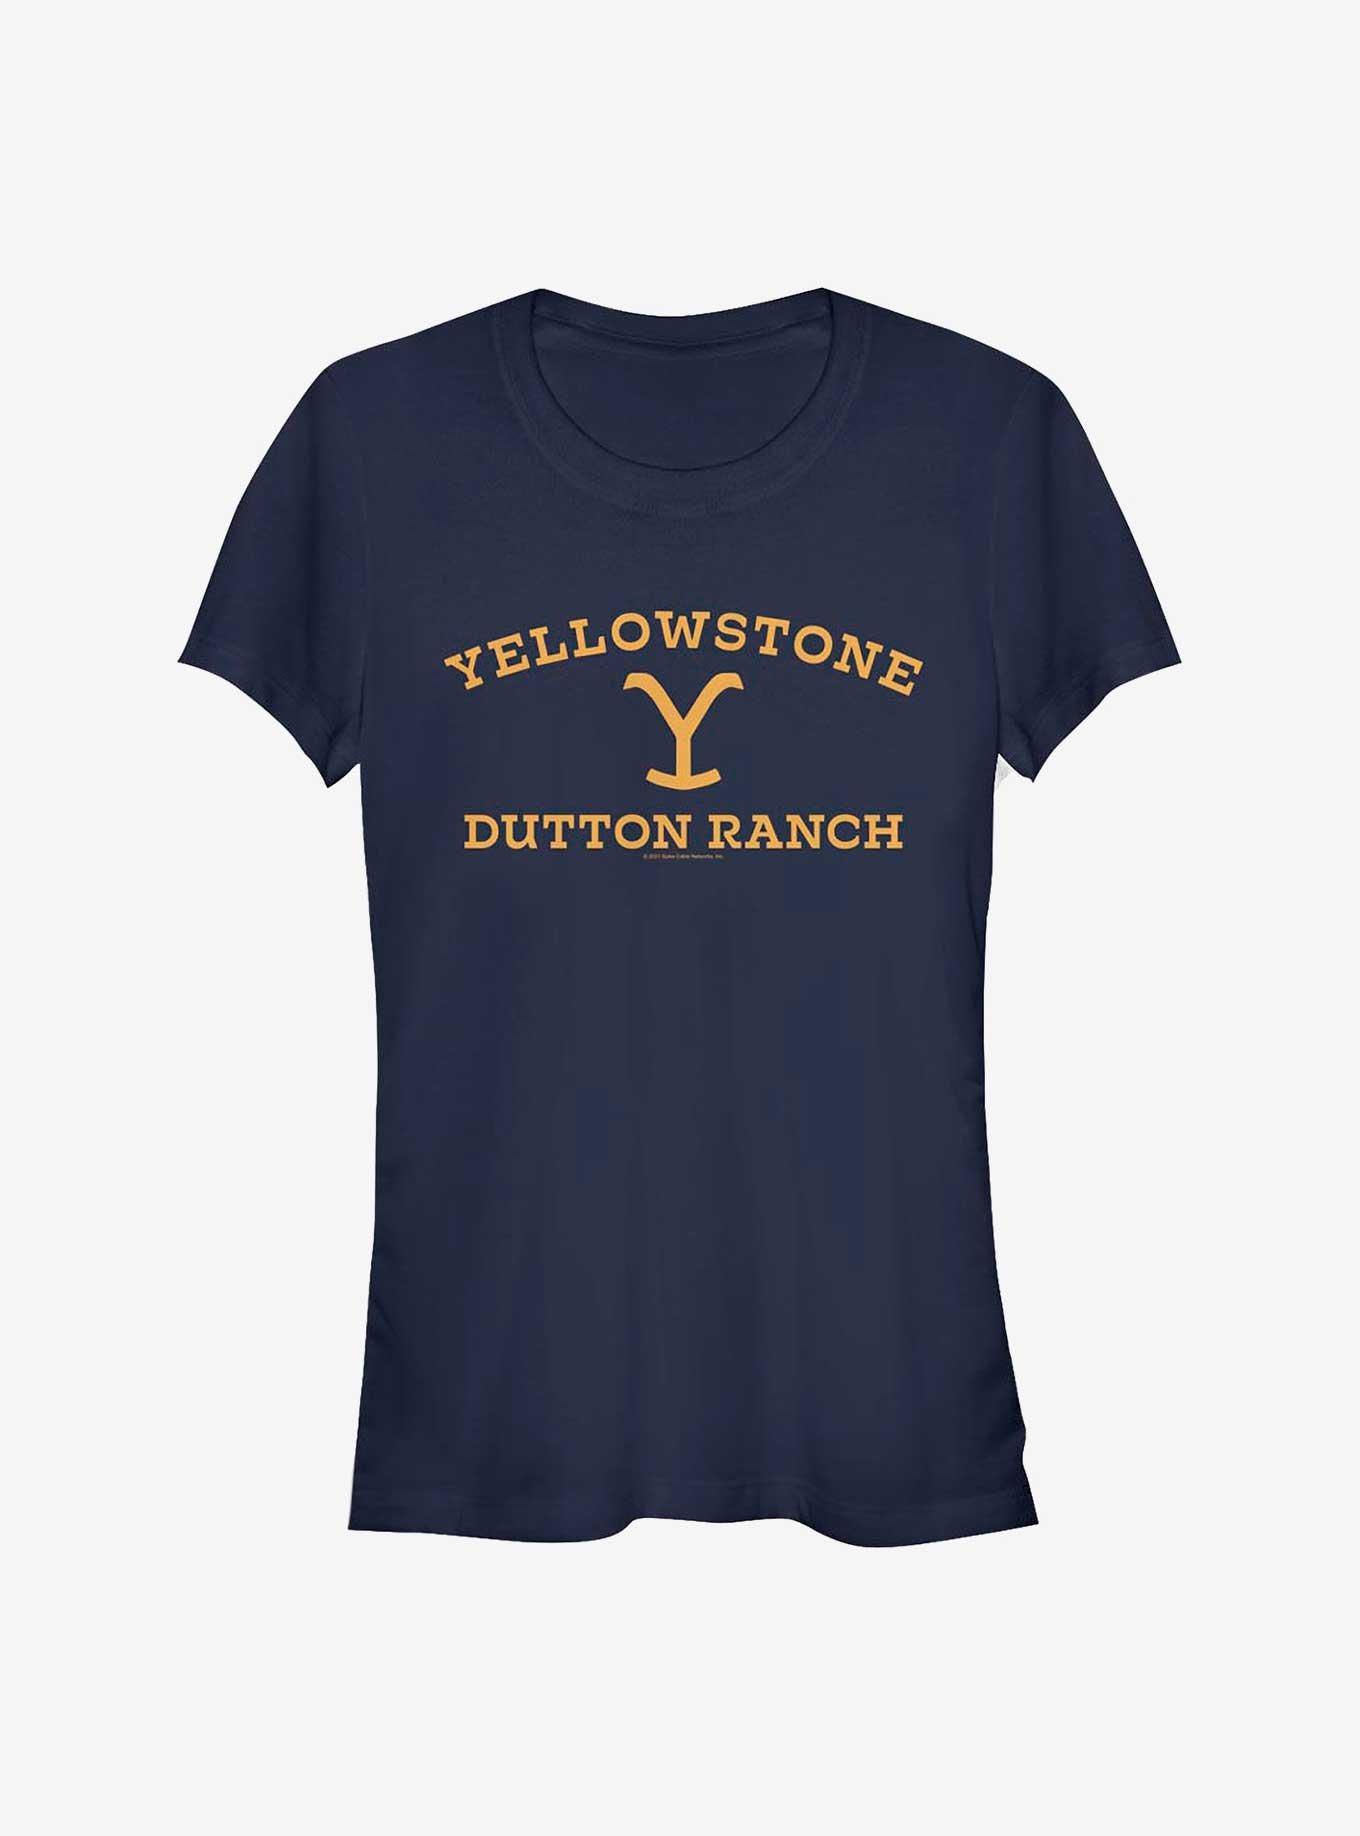 Yellowstone Dutton Ranch Logo Girls T-Shirt, NAVY, hi-res